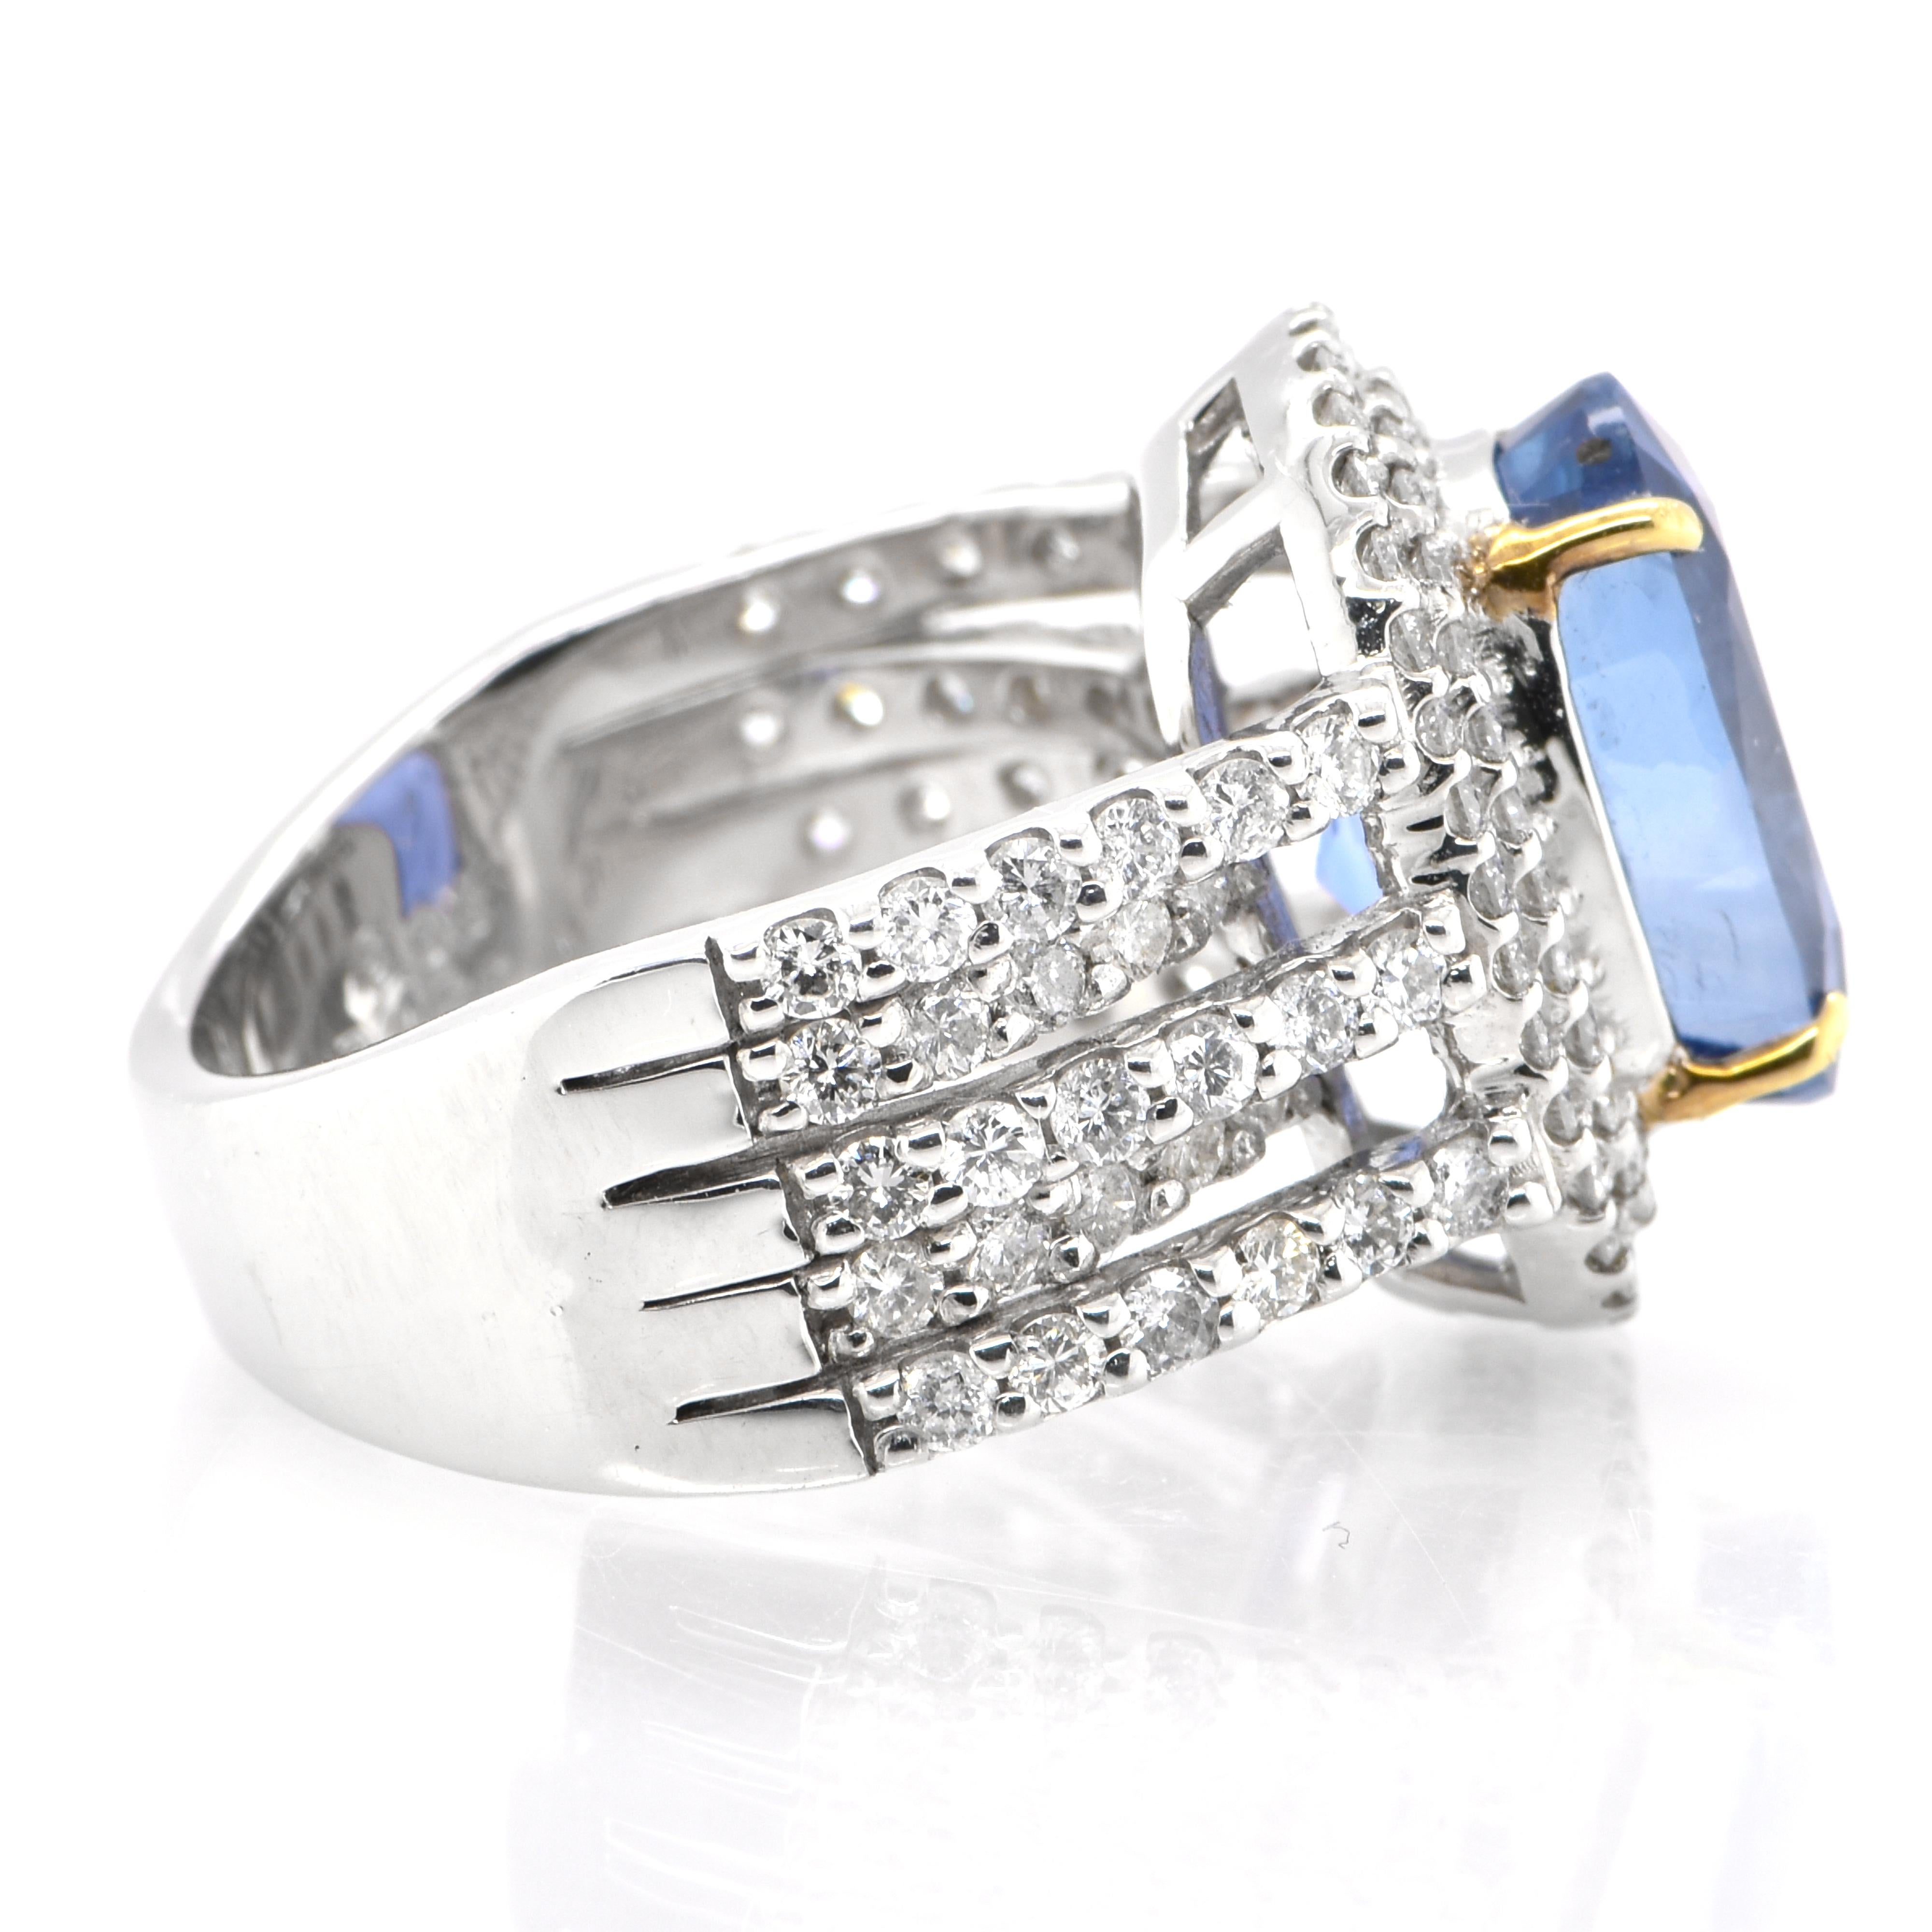 Modern 6.98 Carat Natural Untreated 'No Heat' Sapphire Ring Set in Platinum & Gold